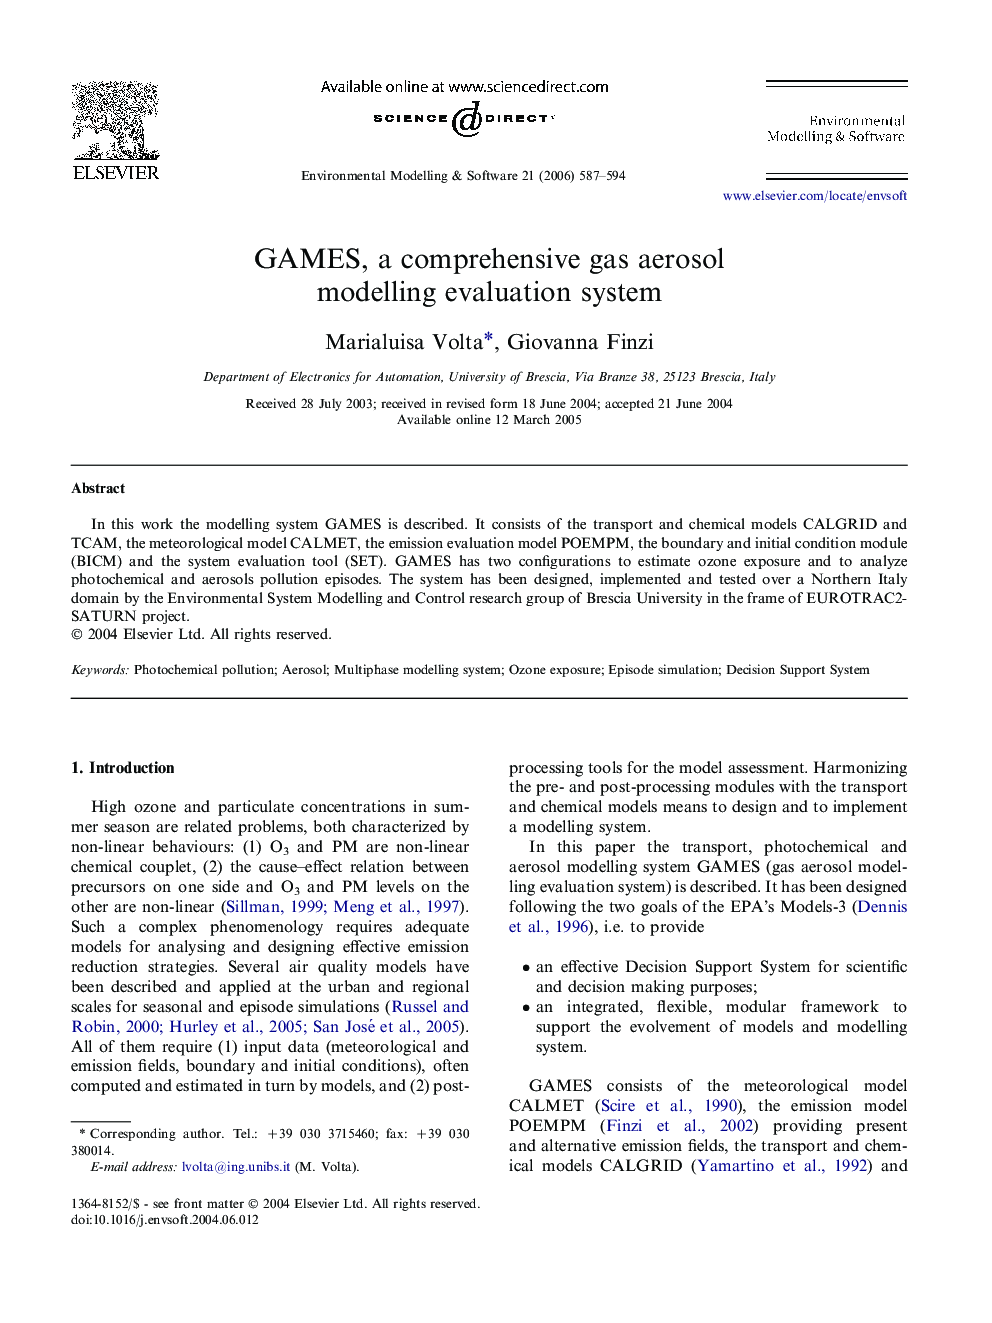 GAMES, a comprehensive gas aerosol modelling evaluation system